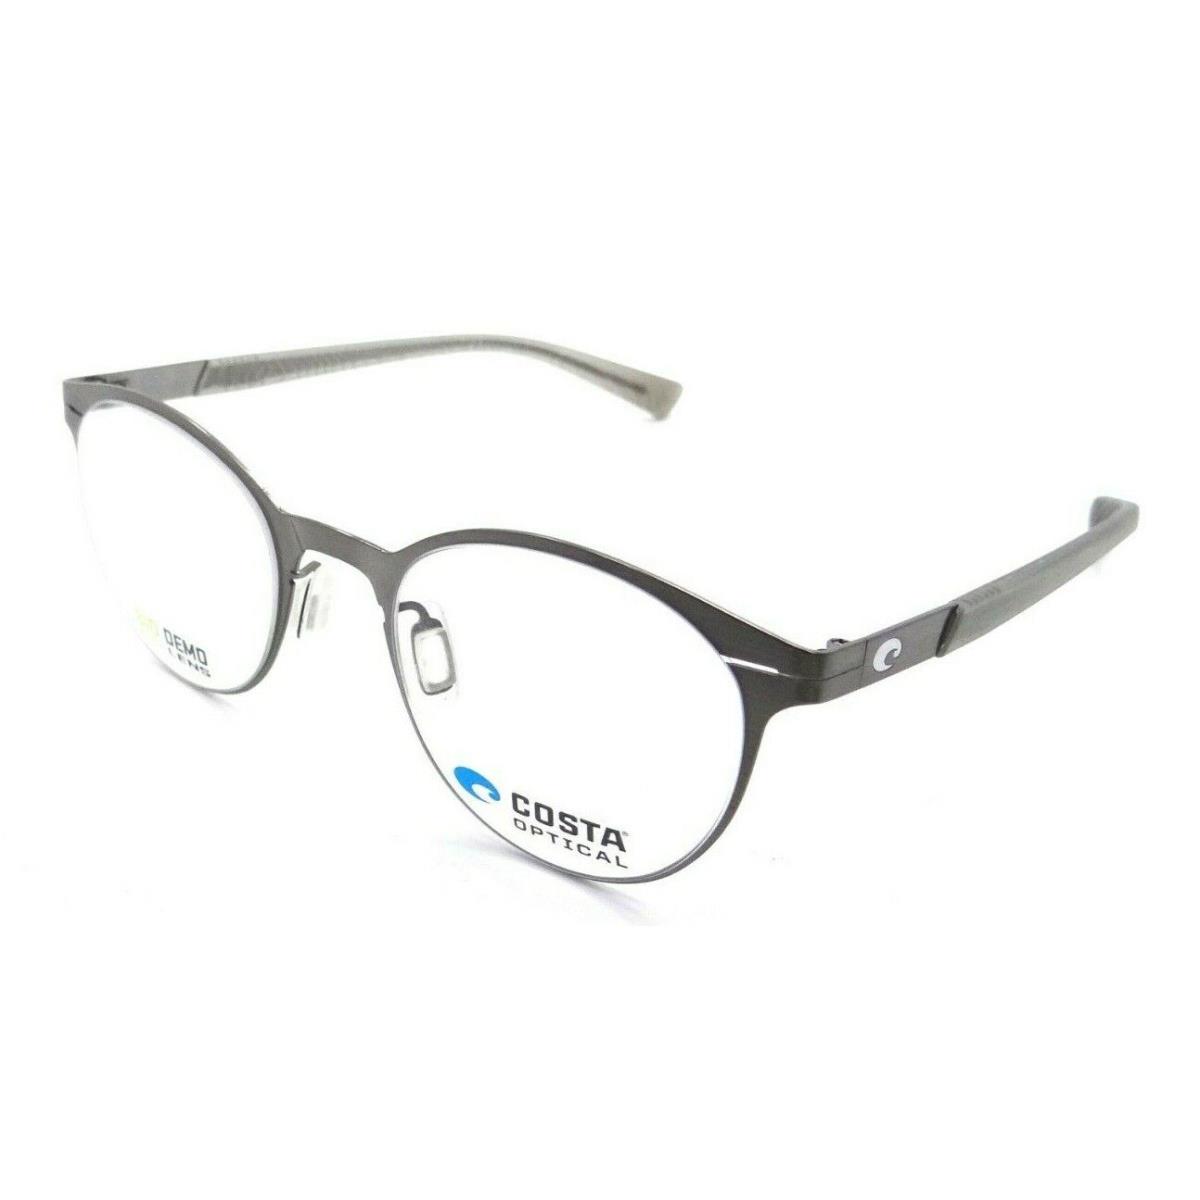 Costa Del Mar Eyeglasses Frames Pacific Rise 210 48-20-135 Shiny Brushed Light